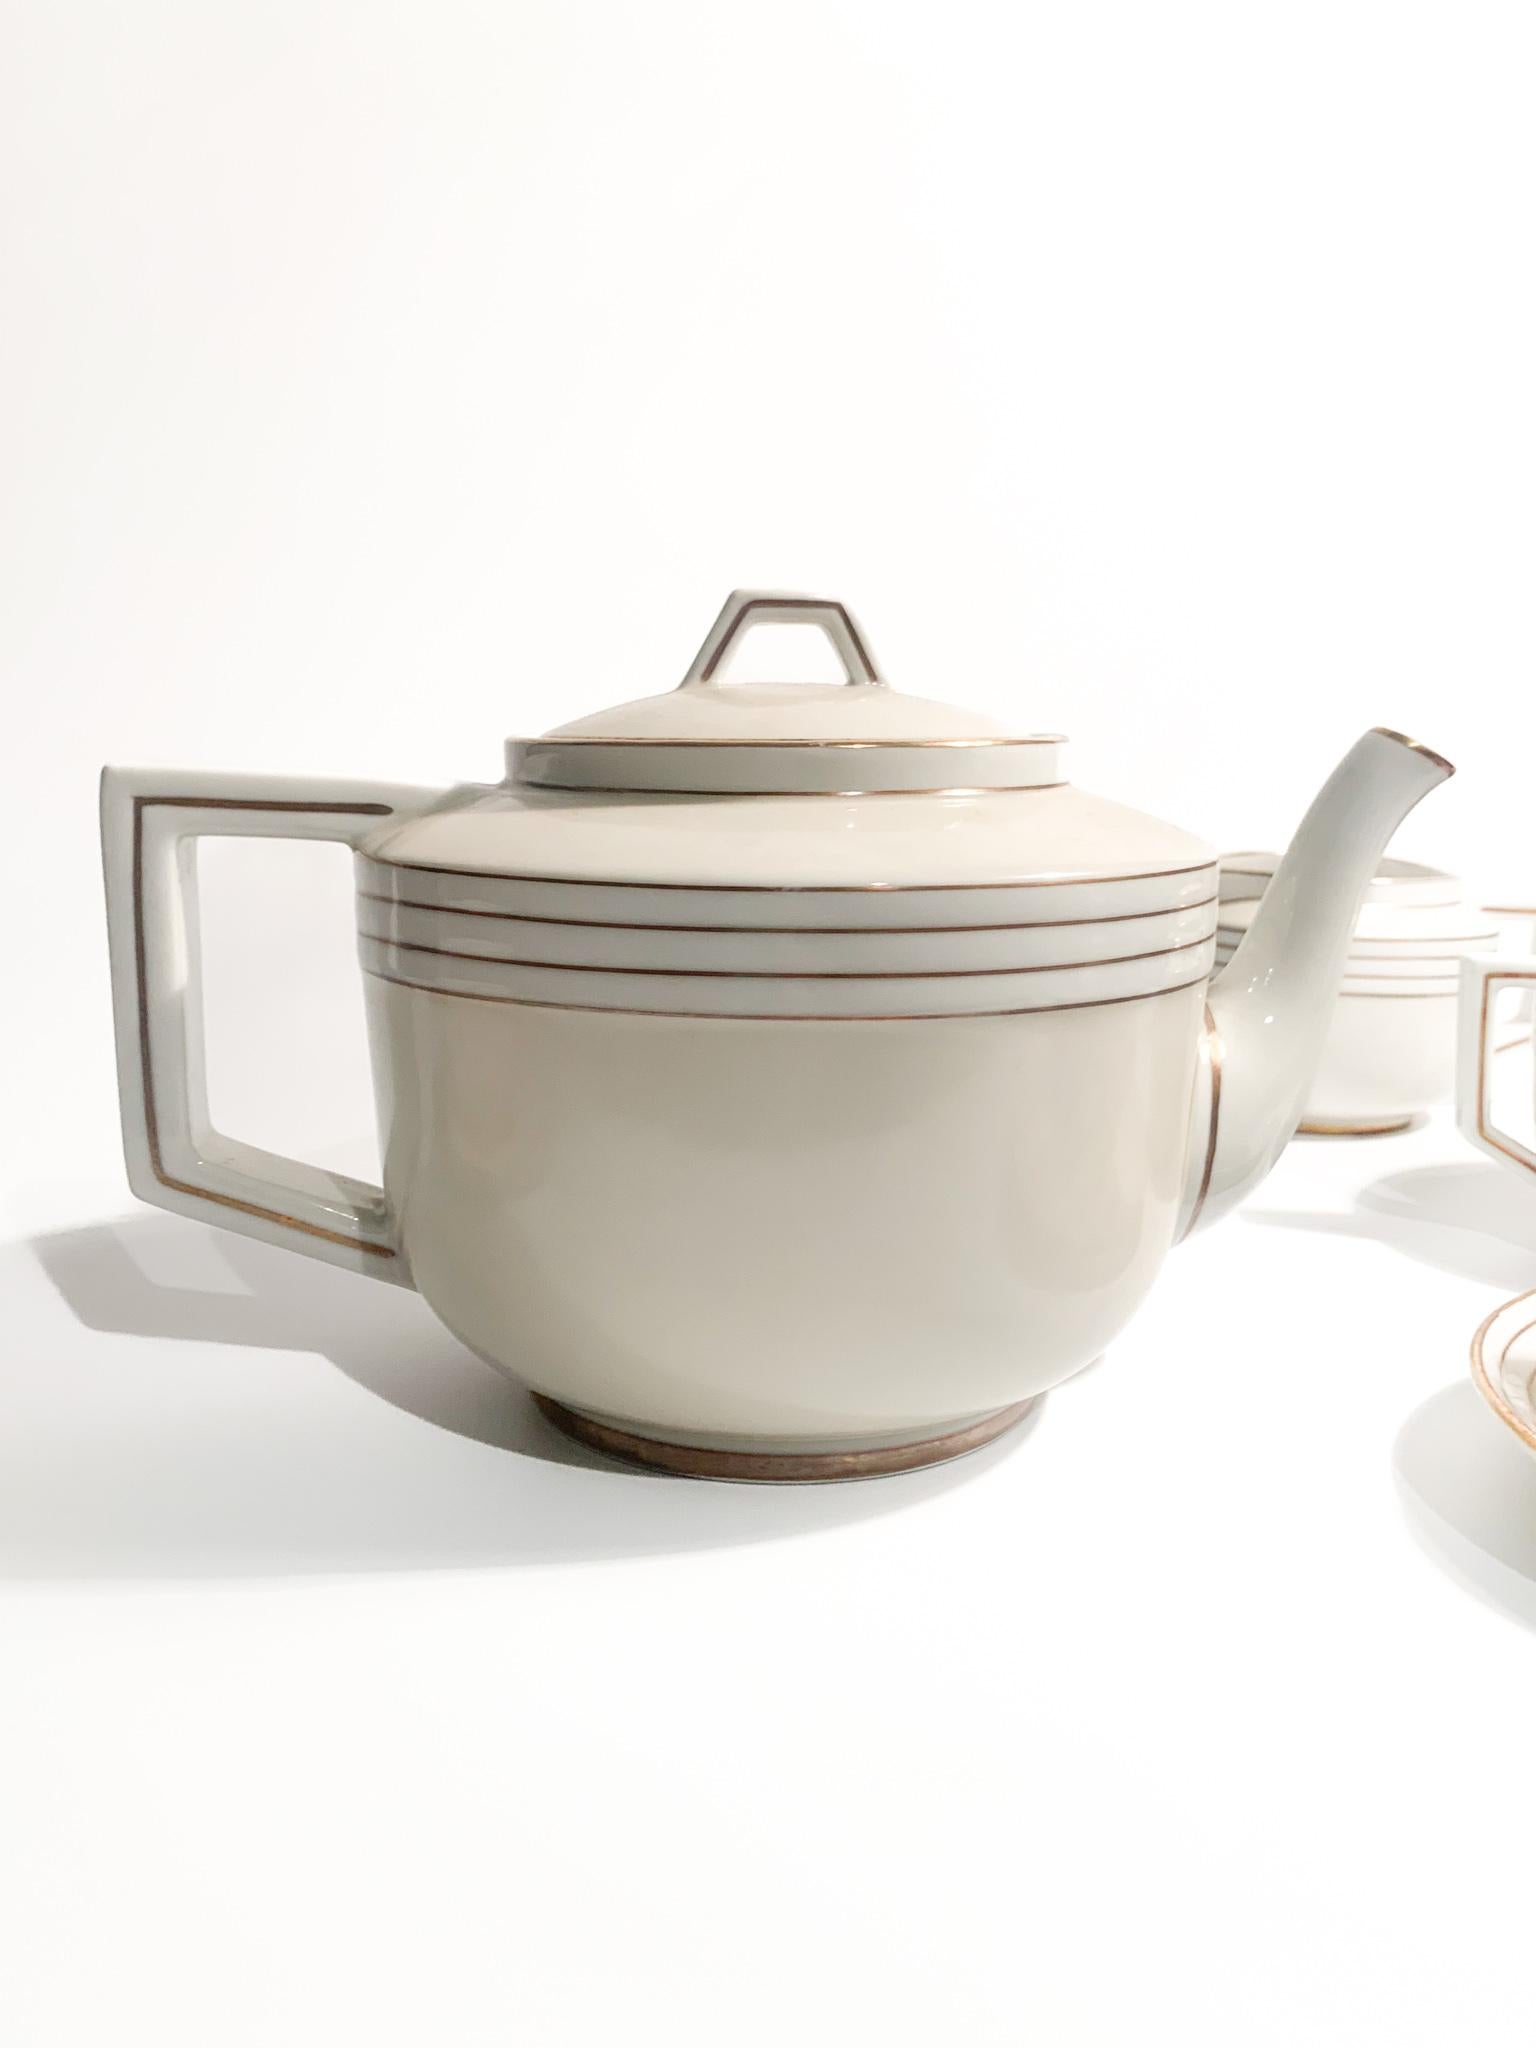 Twelve Richard Ginori Decò Tea Set in Porcelain from the 1940s For Sale 2